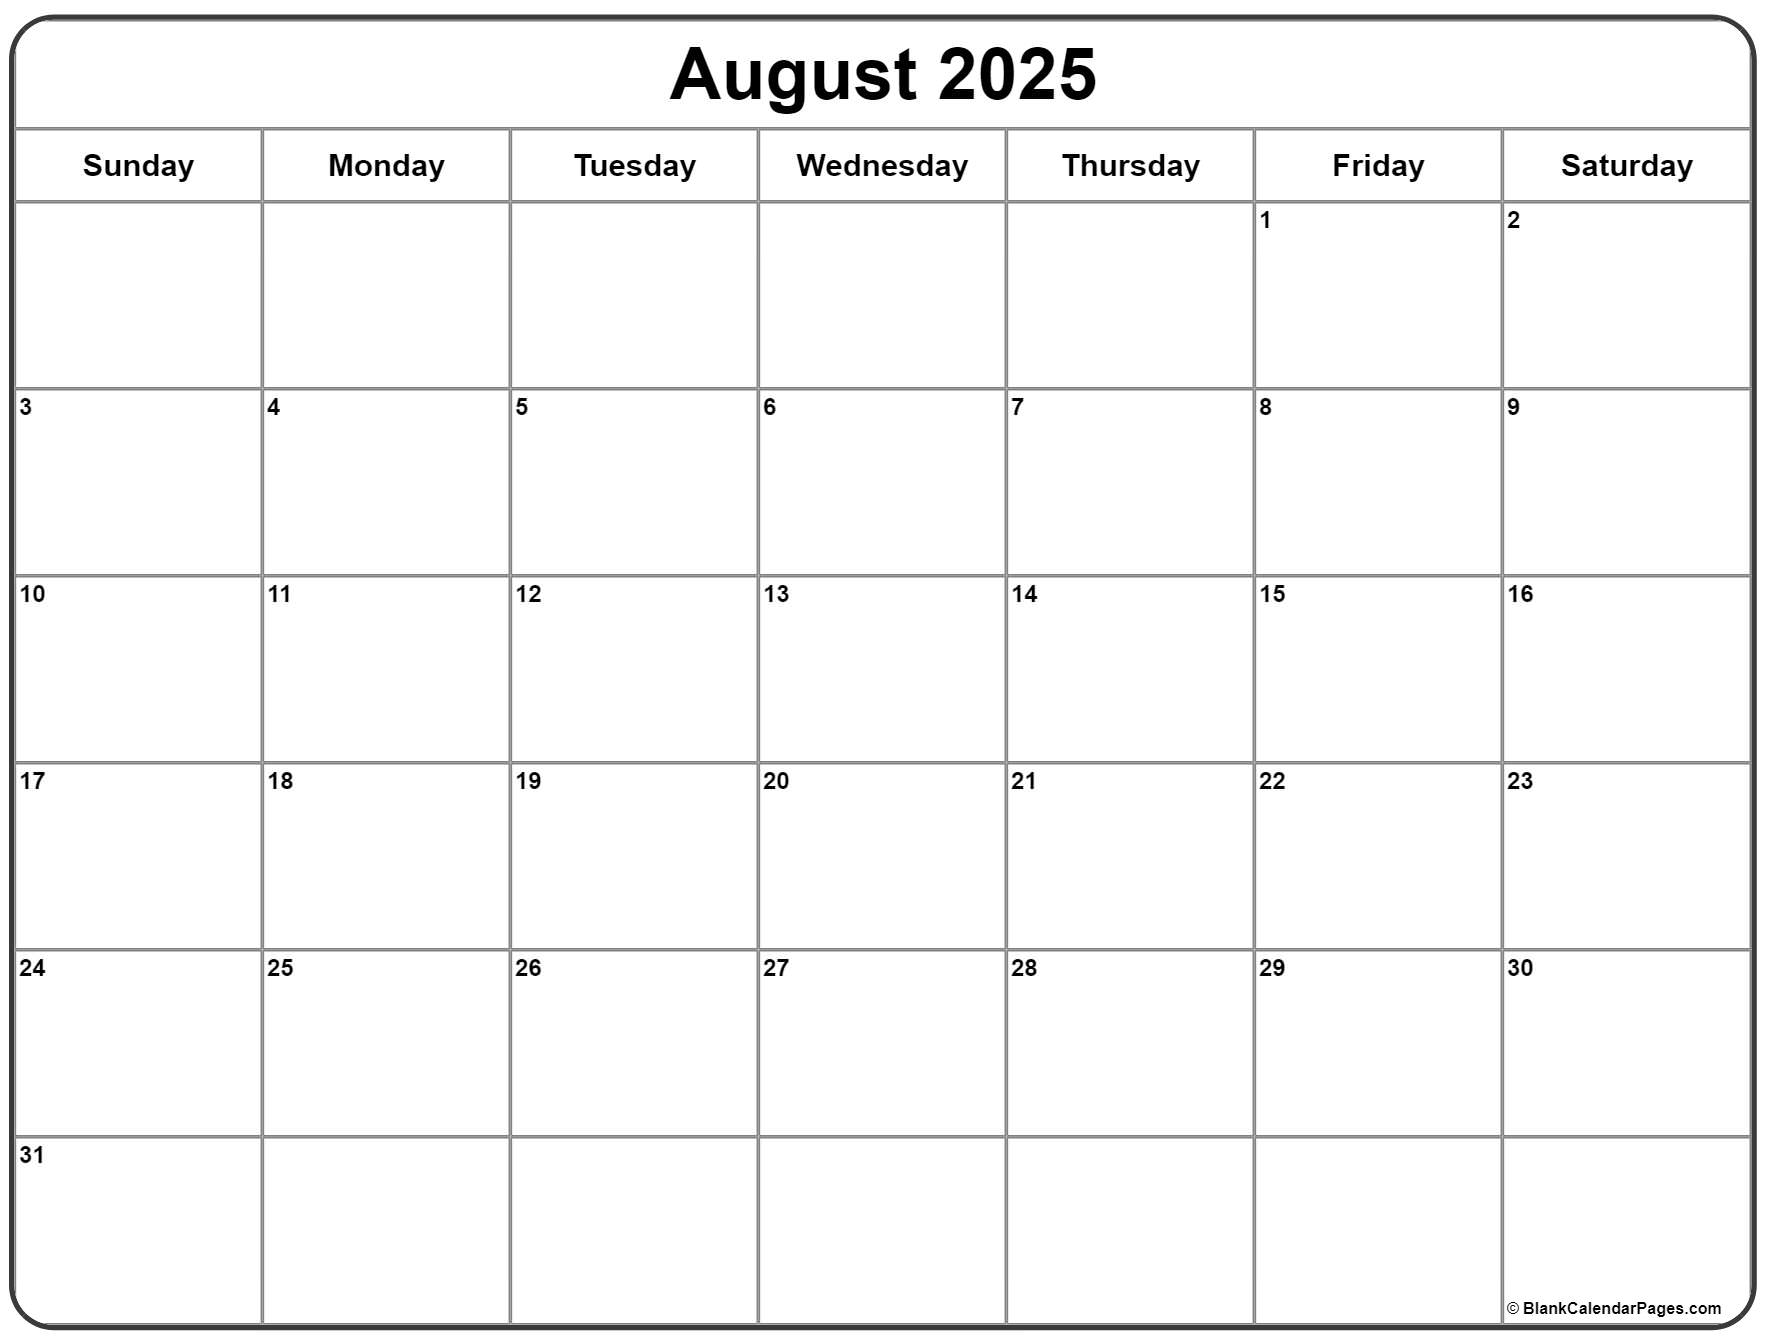 August 2025 calendar free printable calendar